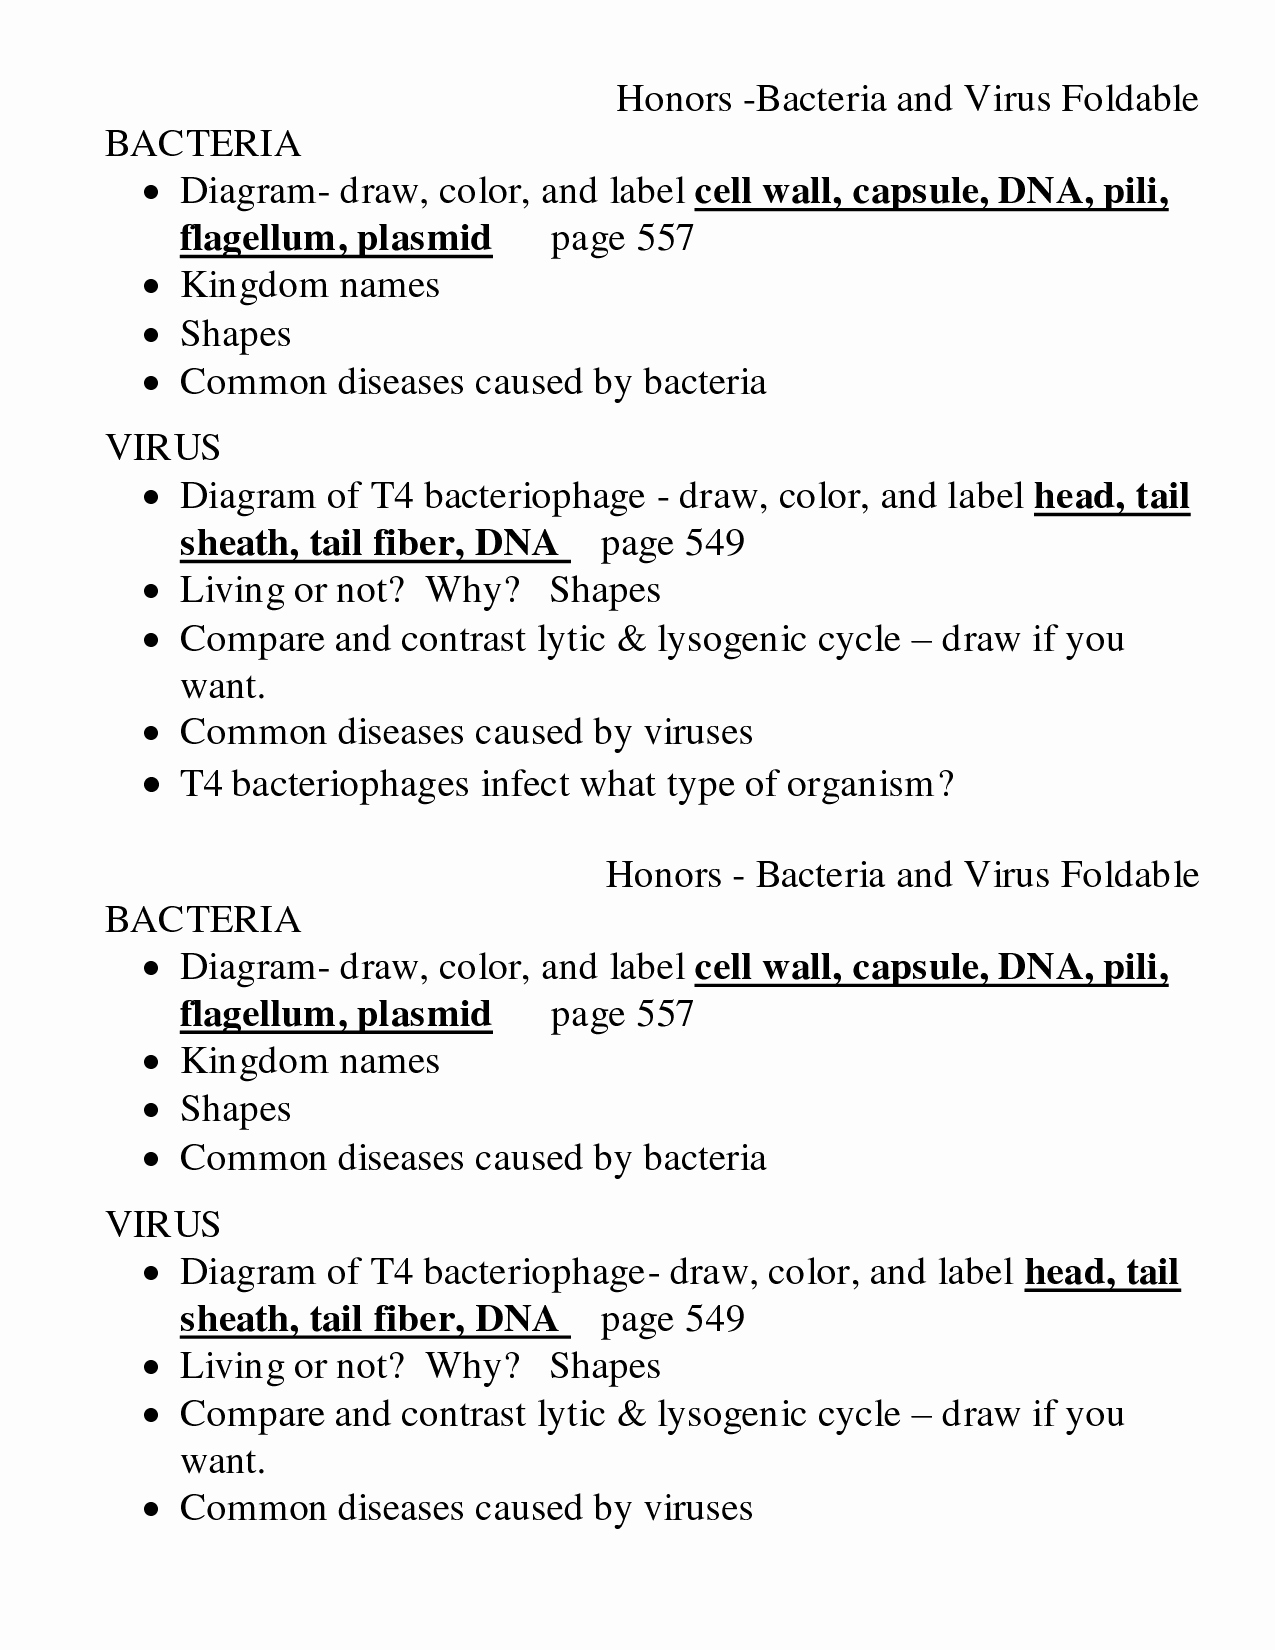 Virus and Bacteria Worksheet Lovely Bacteria Worksheet Notes